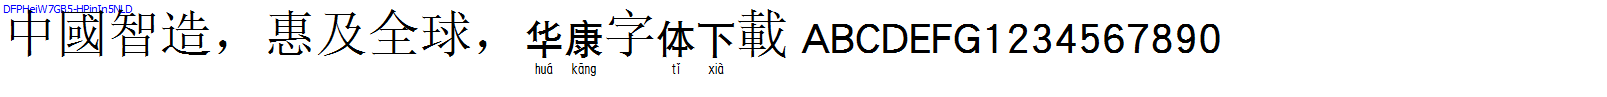 華康字體DFPHeiW7GB5-HPinIn5NLD.TTF